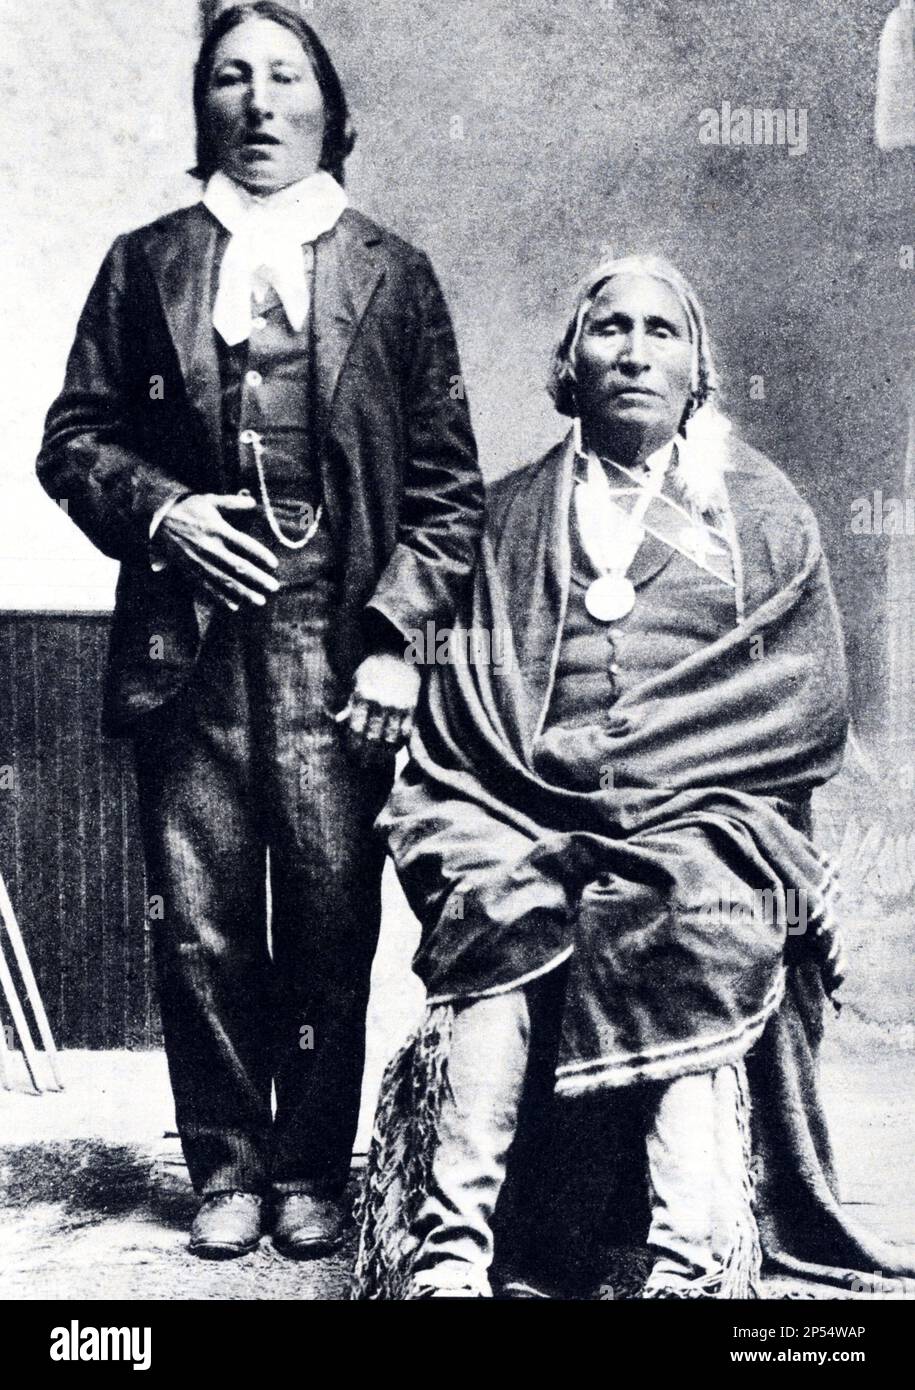 1877  c, USA. : The chef  CRAZY HORSE ( Cavallo Pazzo )  , famous  war leader ( in this photo with his son ) - VECCHIO SELVAGGIO WEST - Old WILD - INDIANO PELLEROSSA - Indiand native americans - portrait - ritratto  ----  Archivio GBB Stock Photo